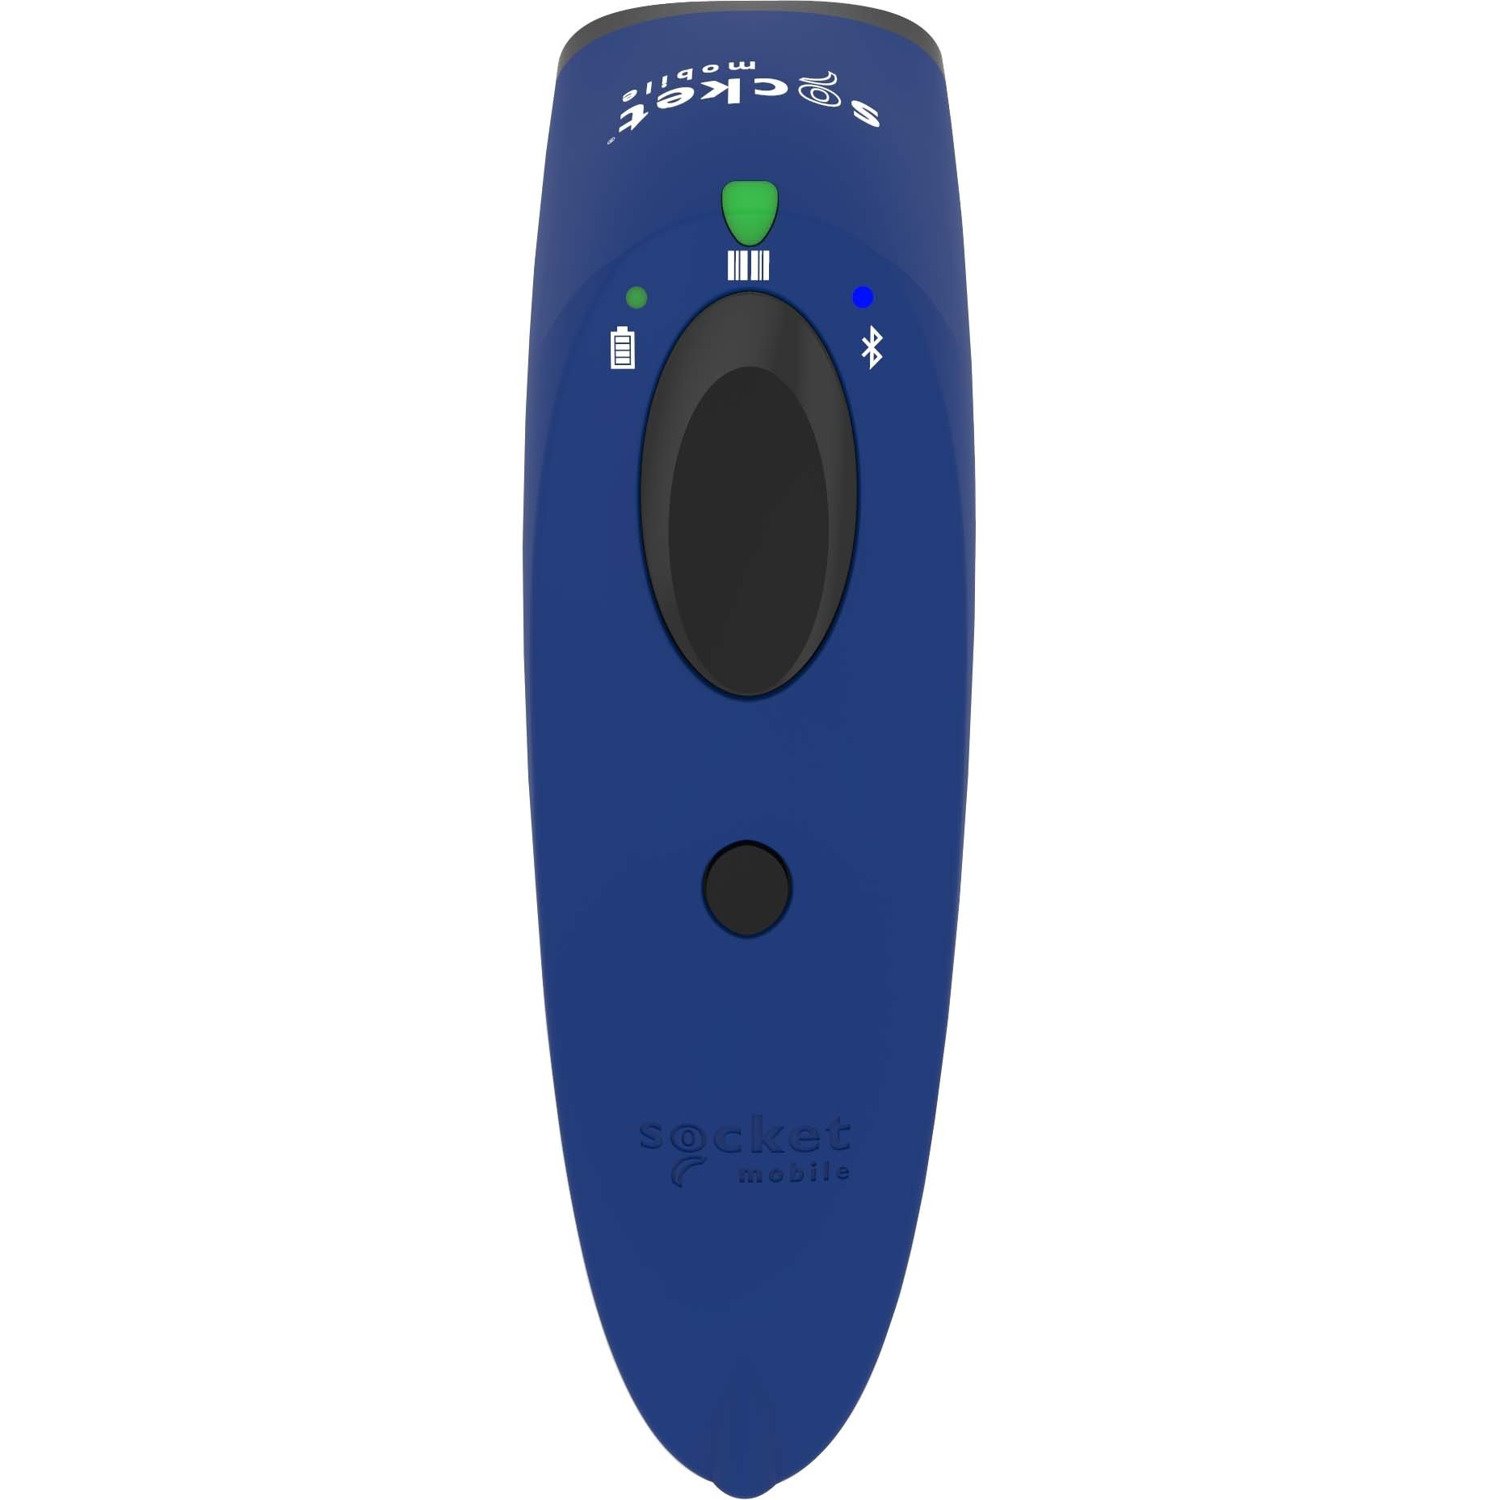 Socket Mobile SocketScan S730 Handheld Barcode Scanner - Wireless Connectivity - Blue